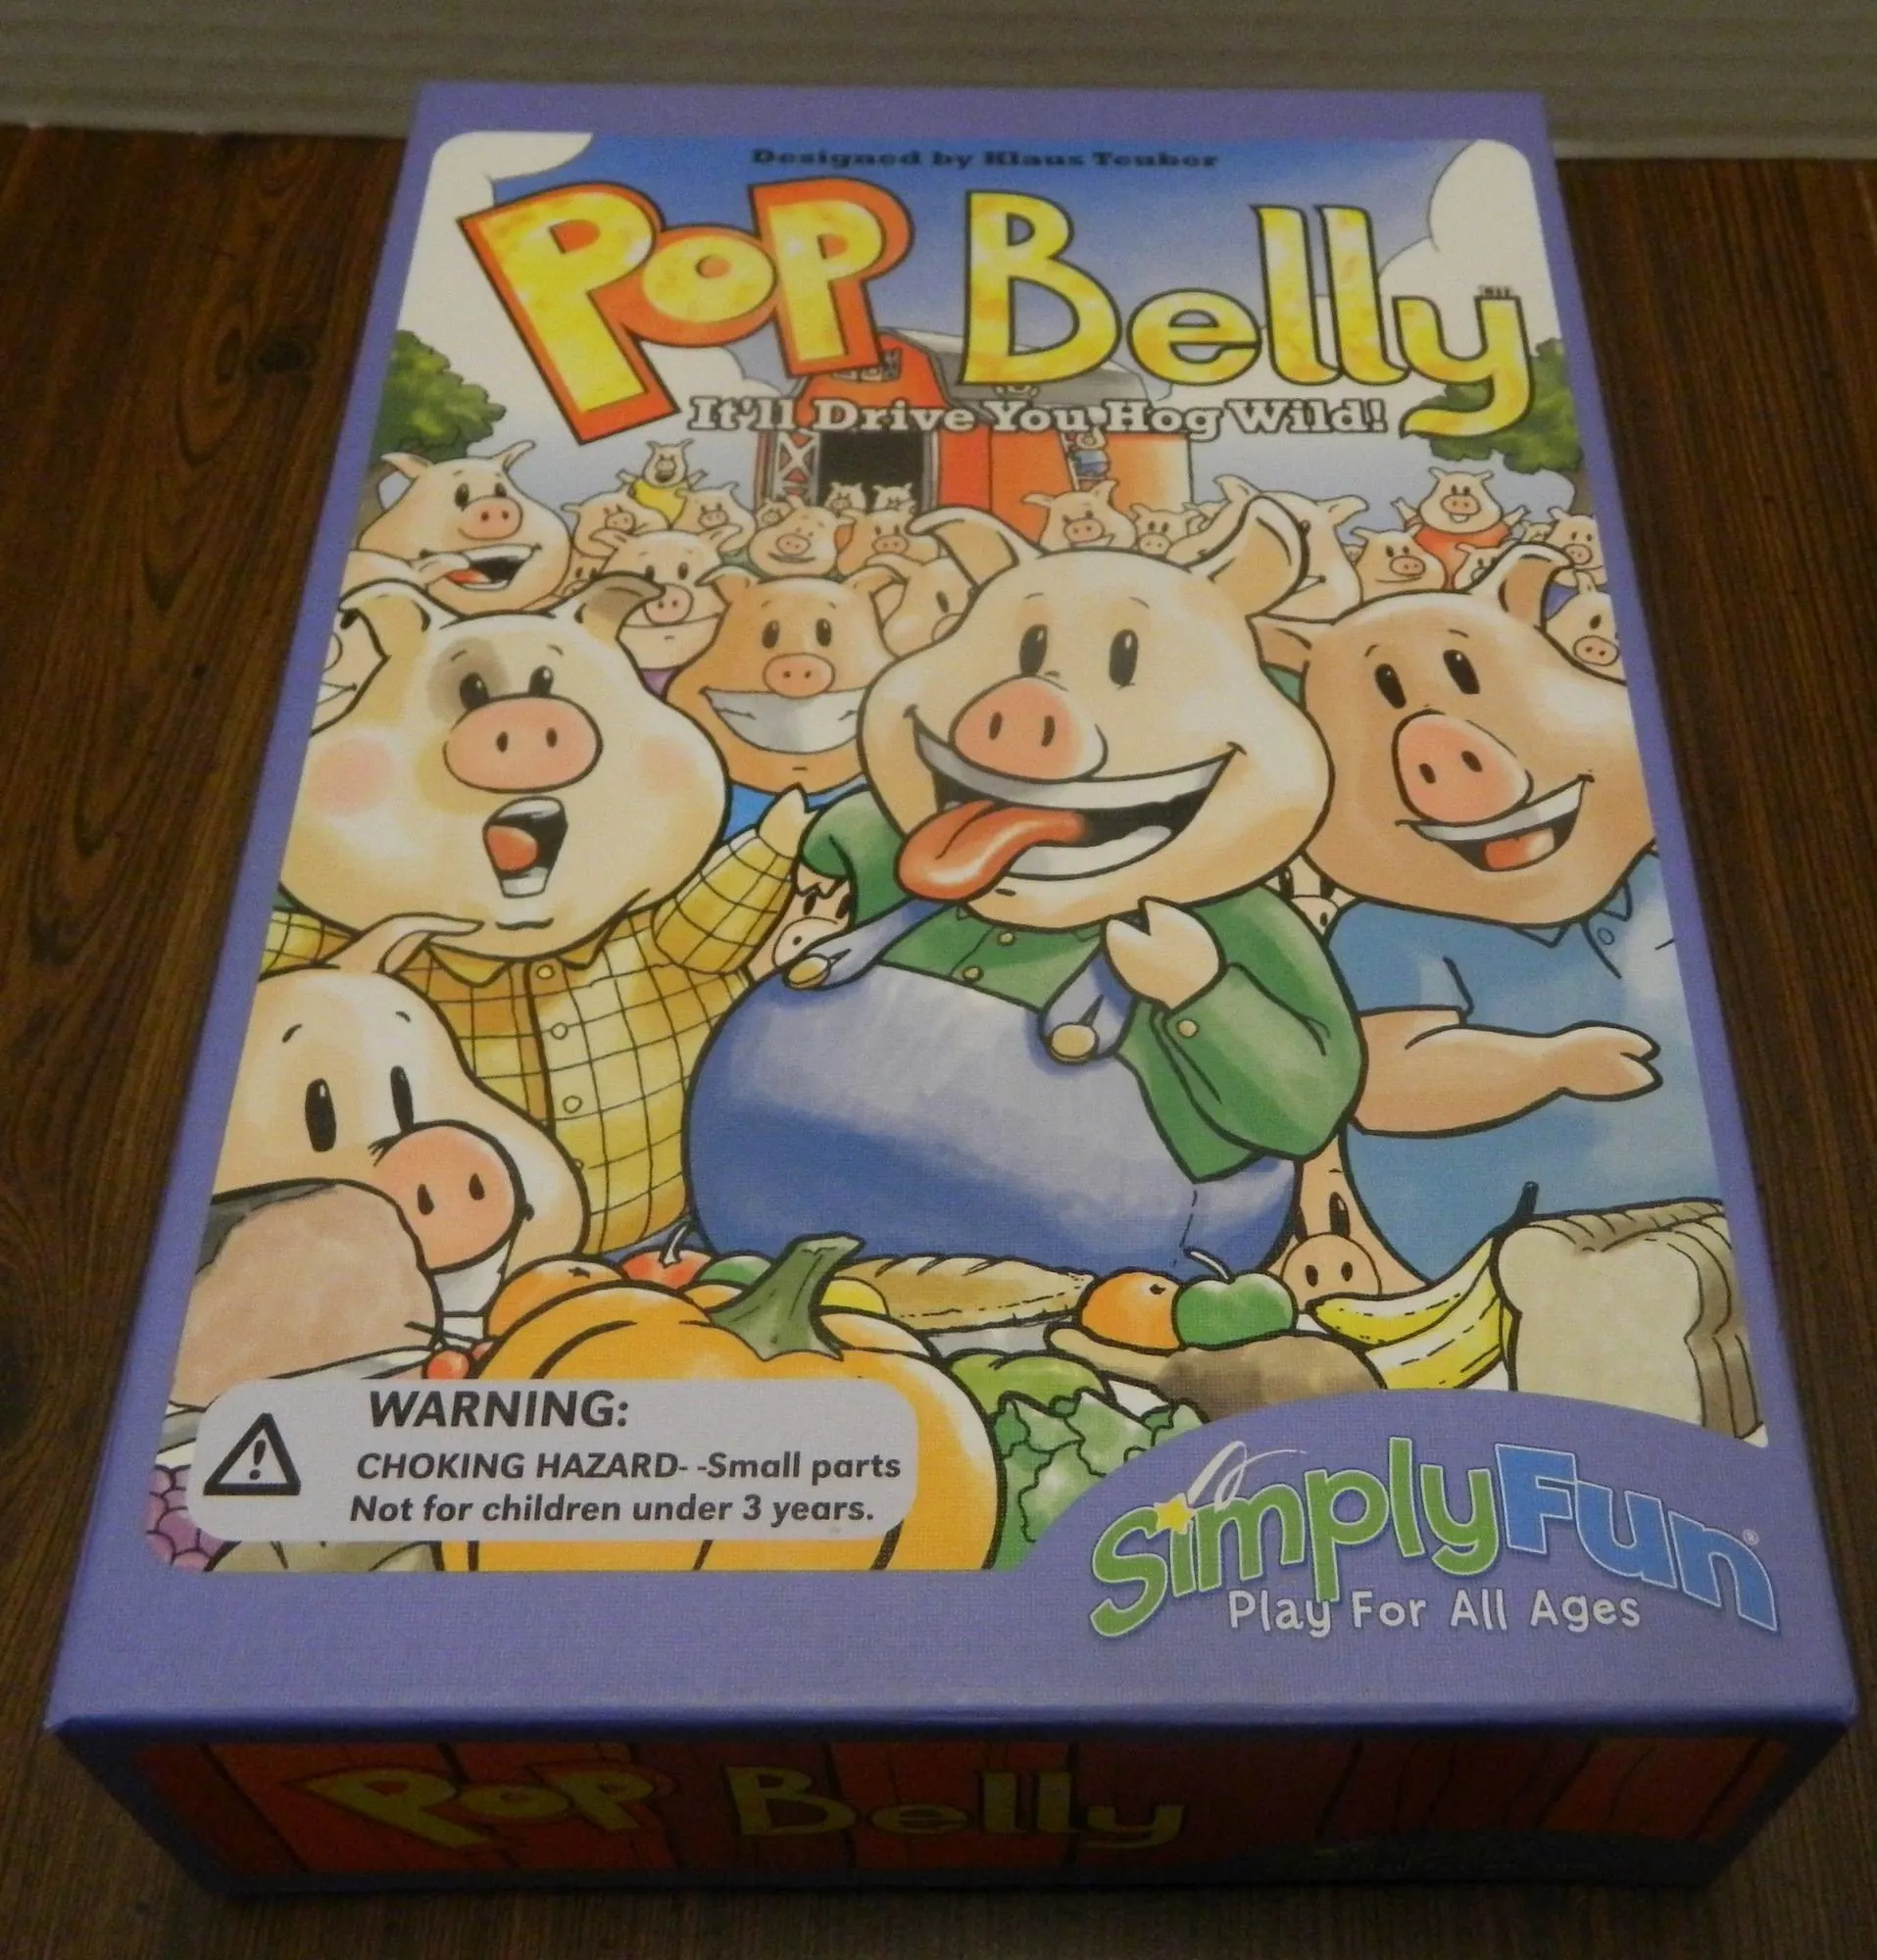 Pop Belly Box